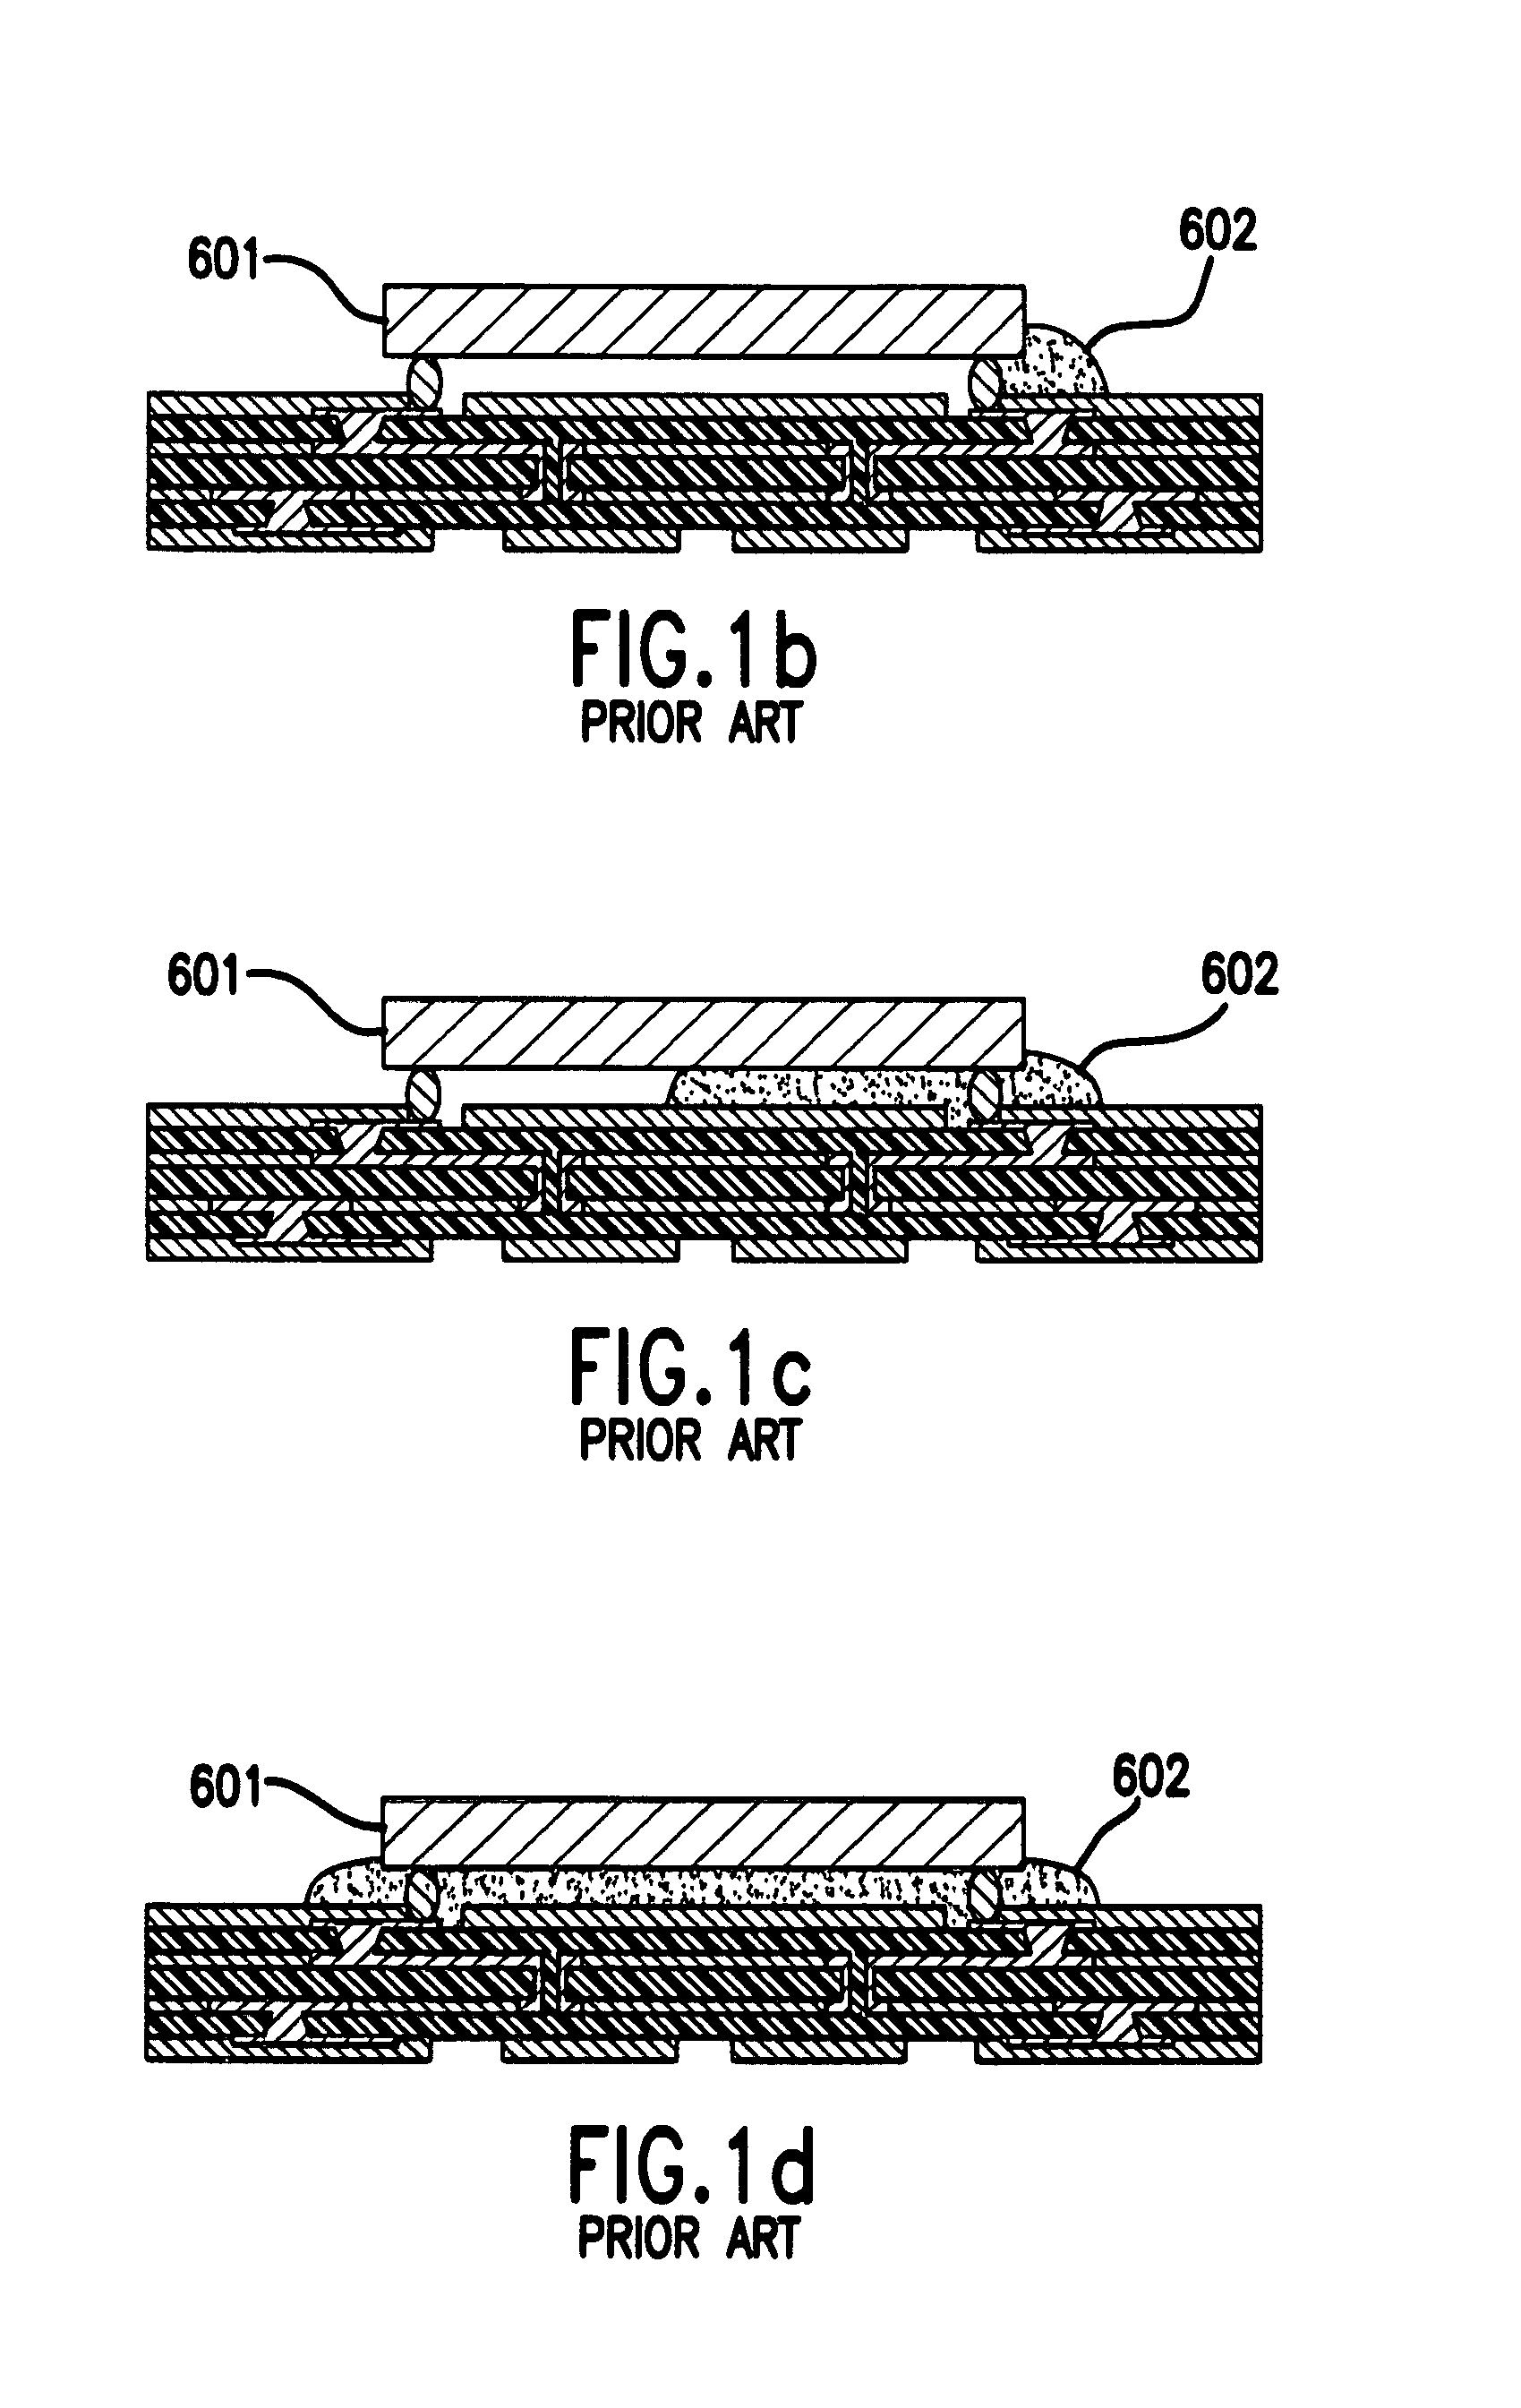 Method of underfill air vent for flipchip BGA